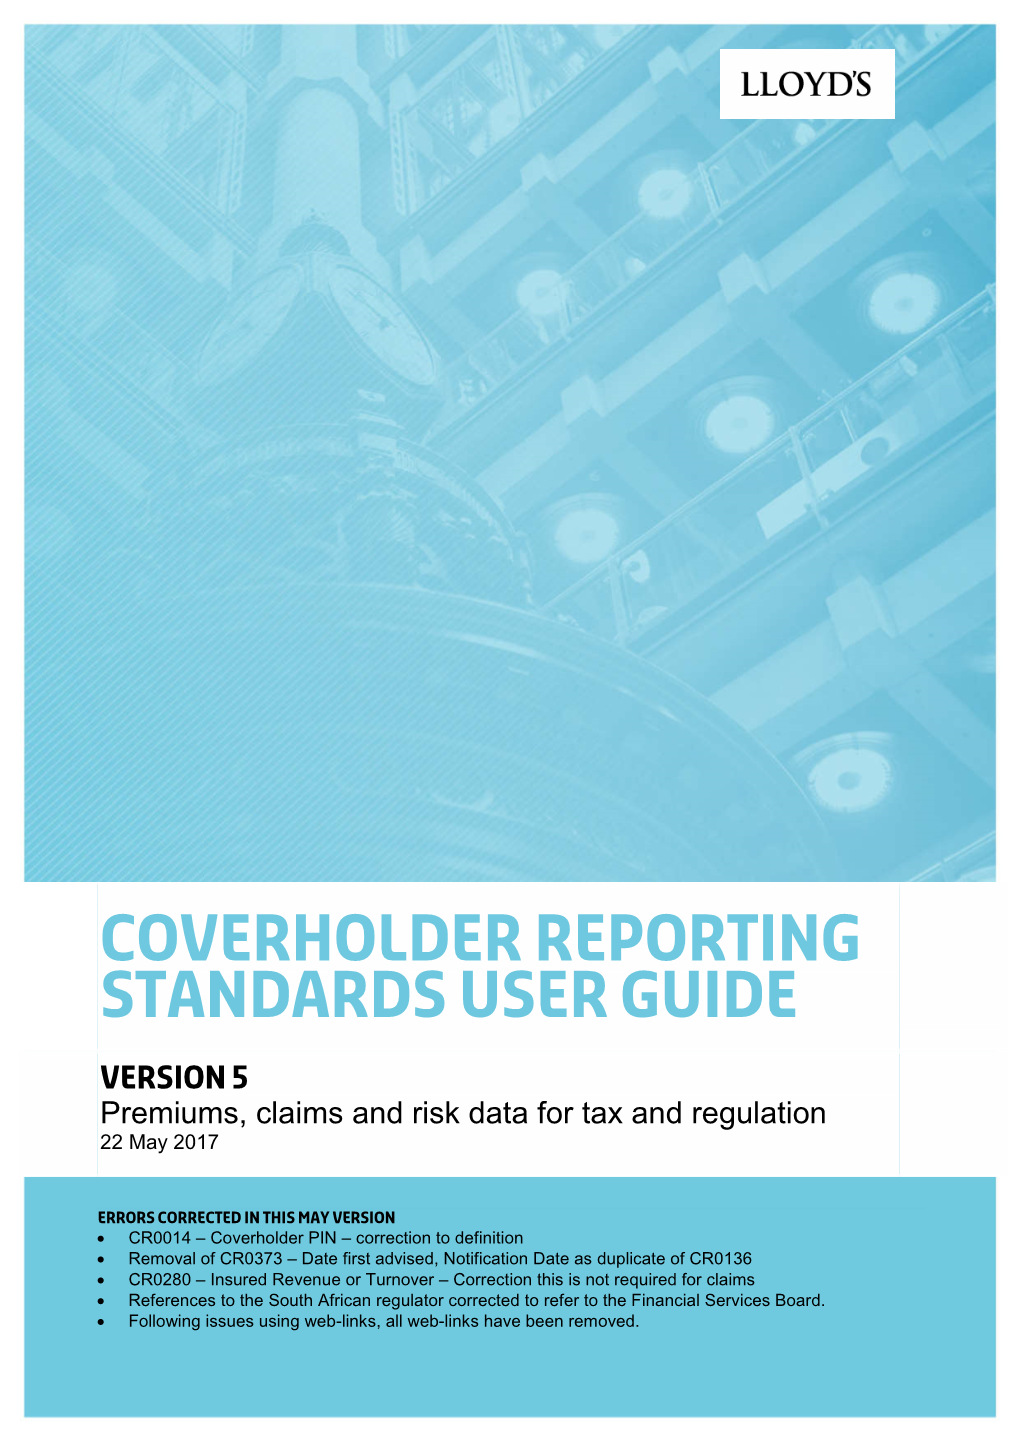 Coverholder Reporting Standards User Guide